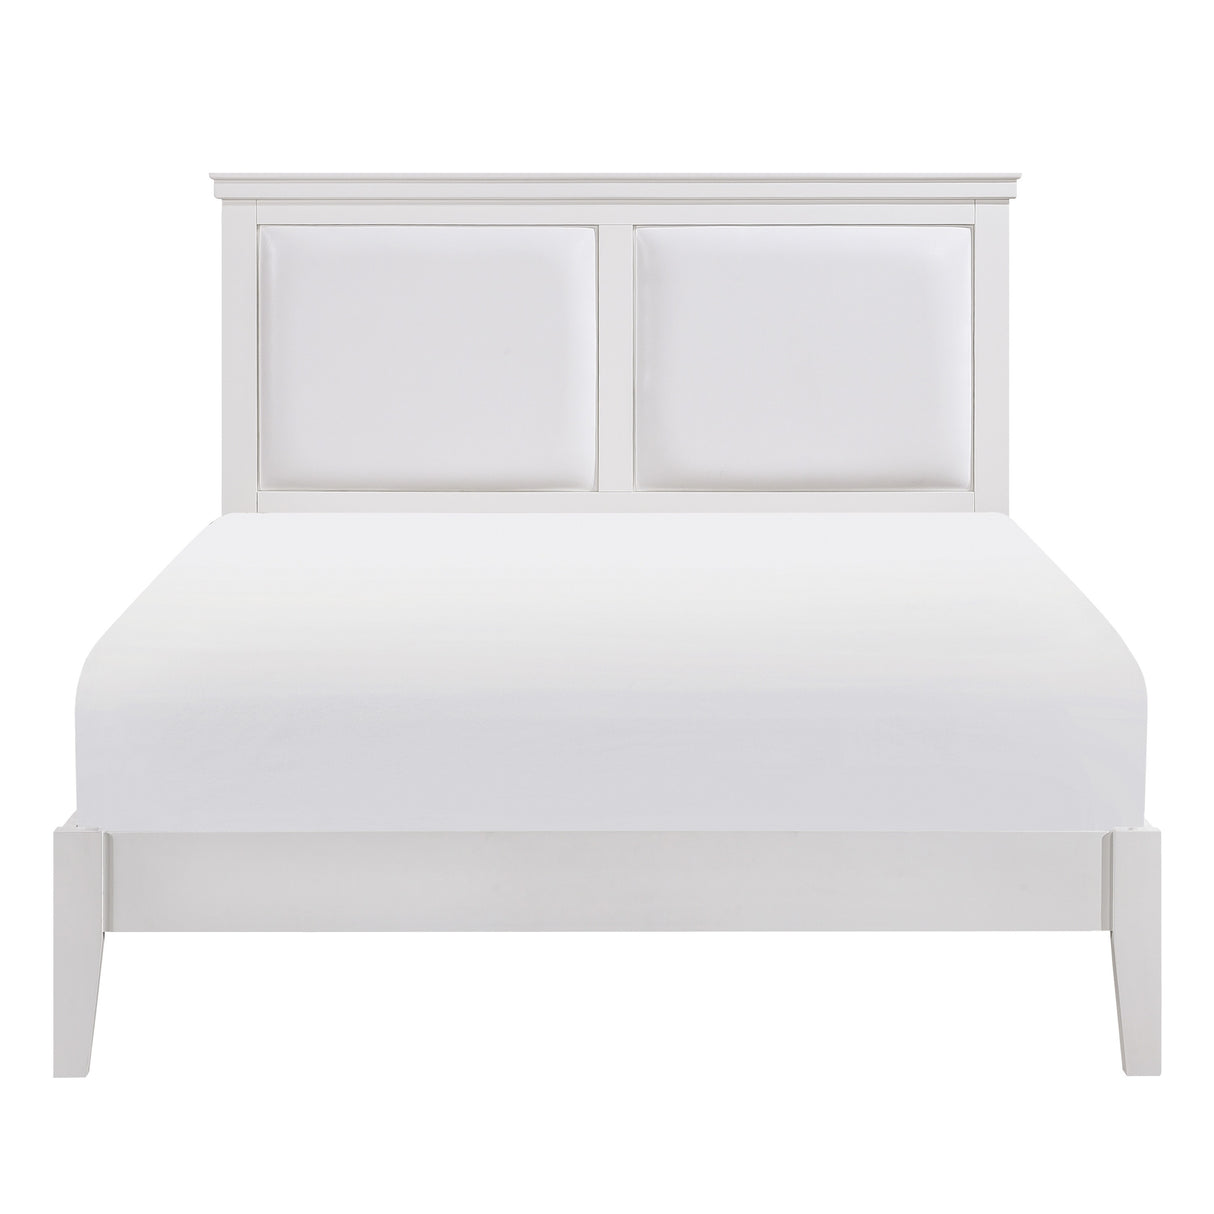 1519WH-1* (2) Queen Bed - Luna Furniture